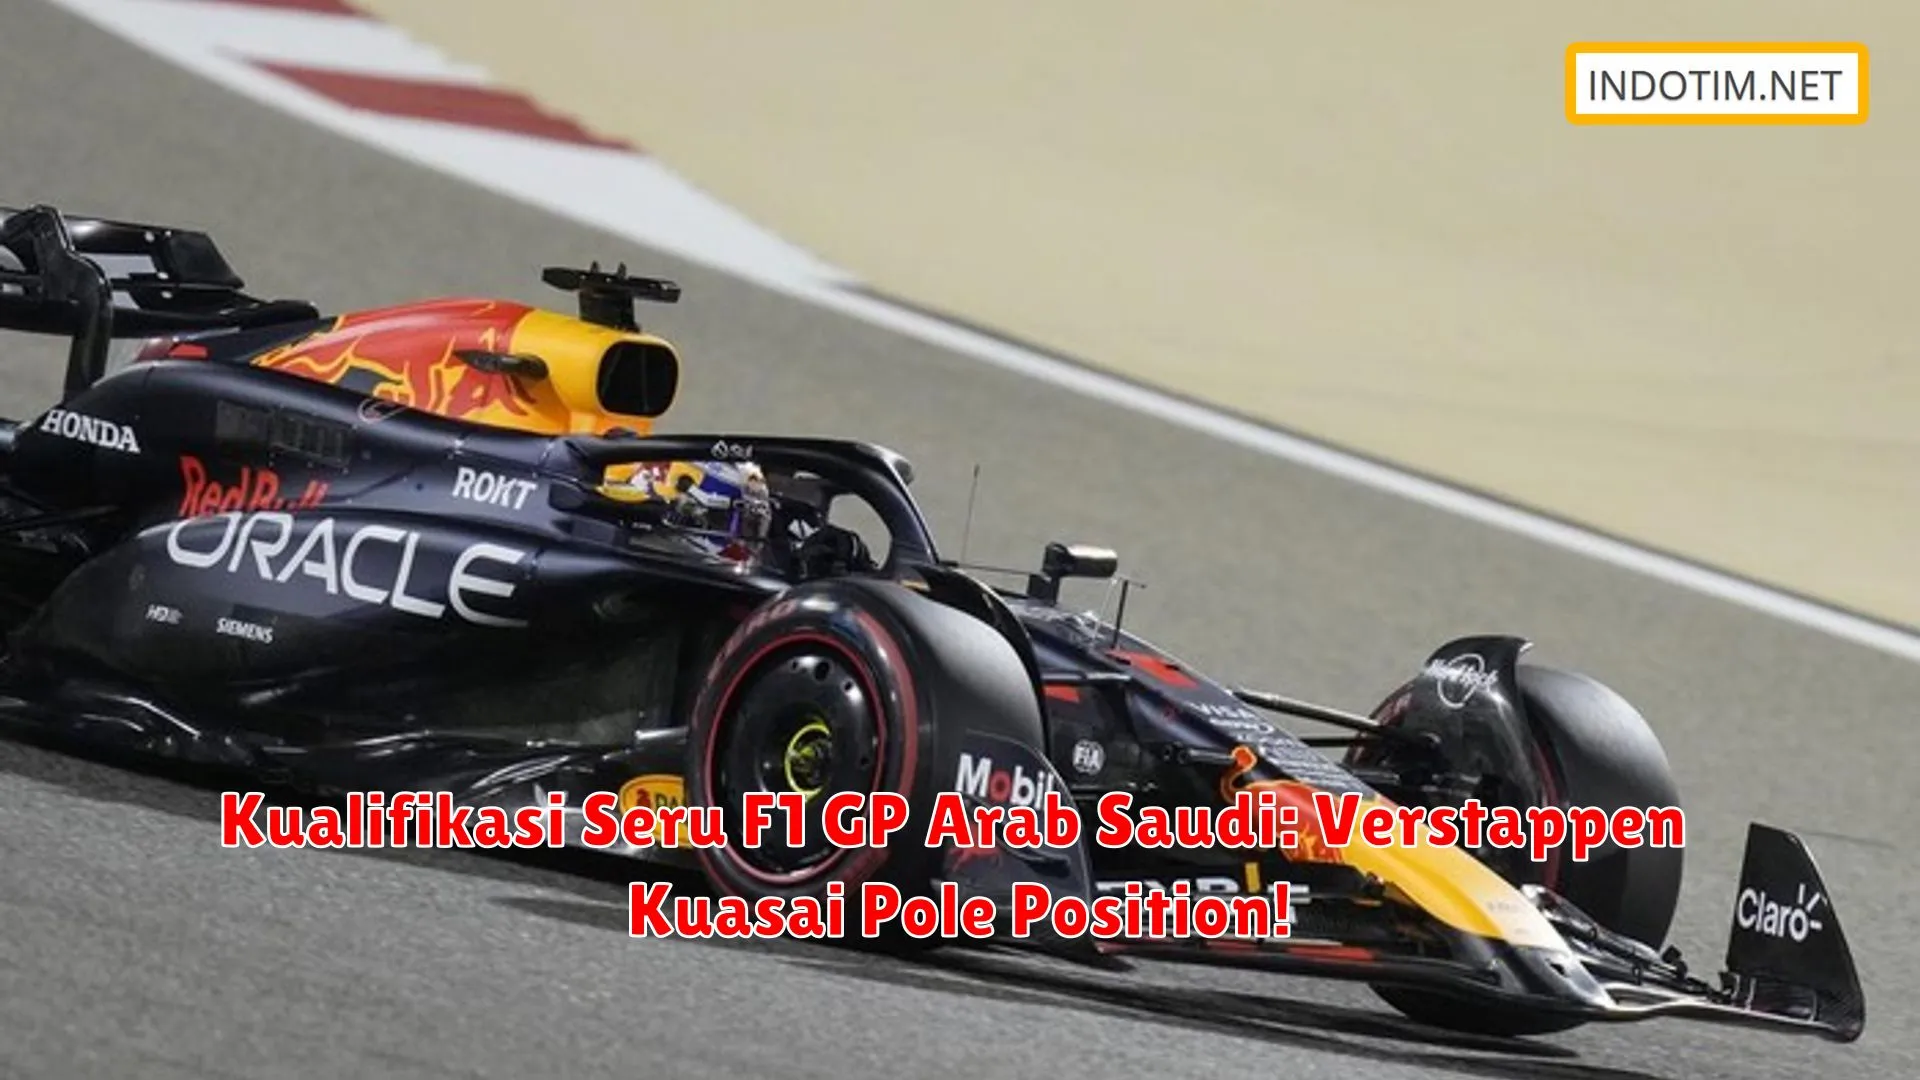 Kualifikasi Seru F1 GP Arab Saudi: Verstappen Kuasai Pole Position!